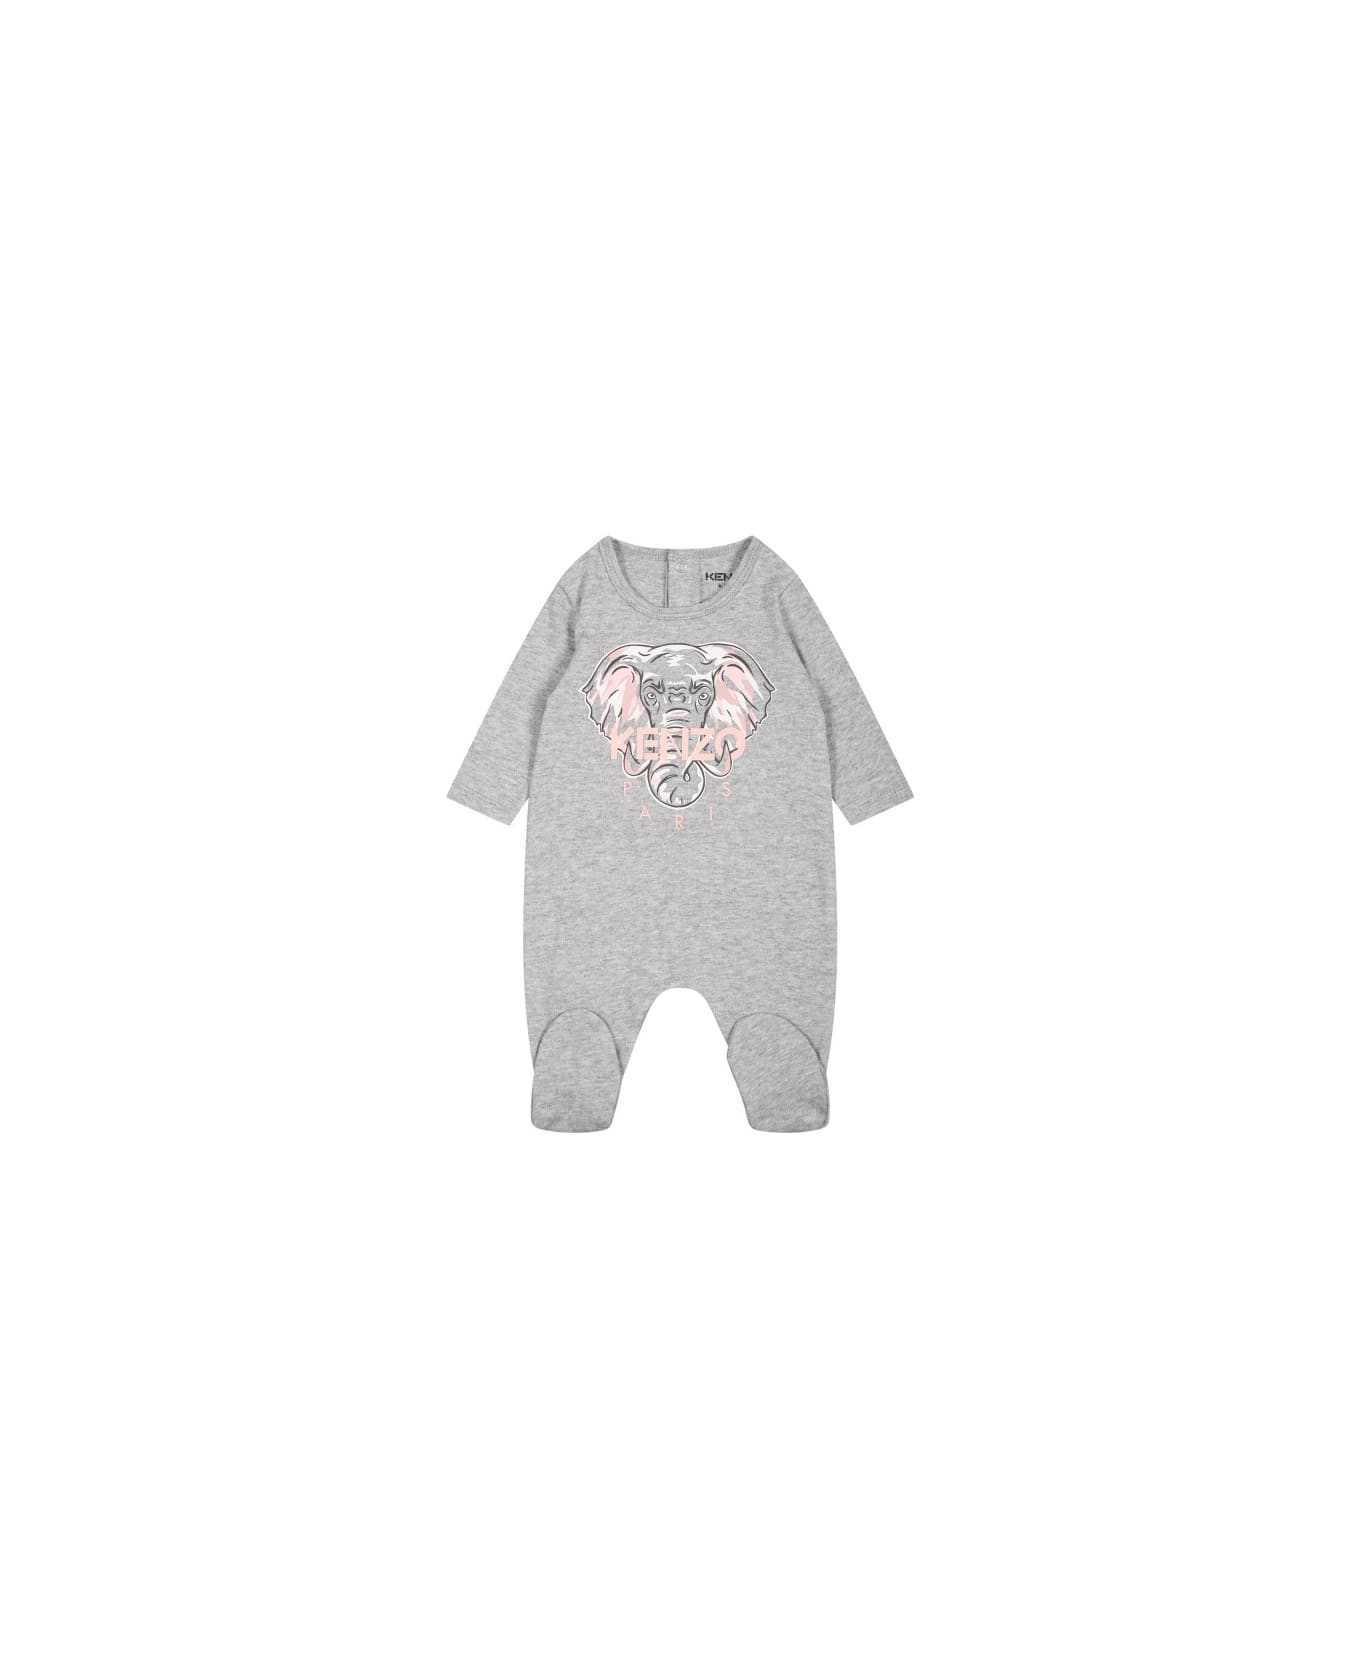 Kenzo Kids 2-piece Newborn Set - Gray